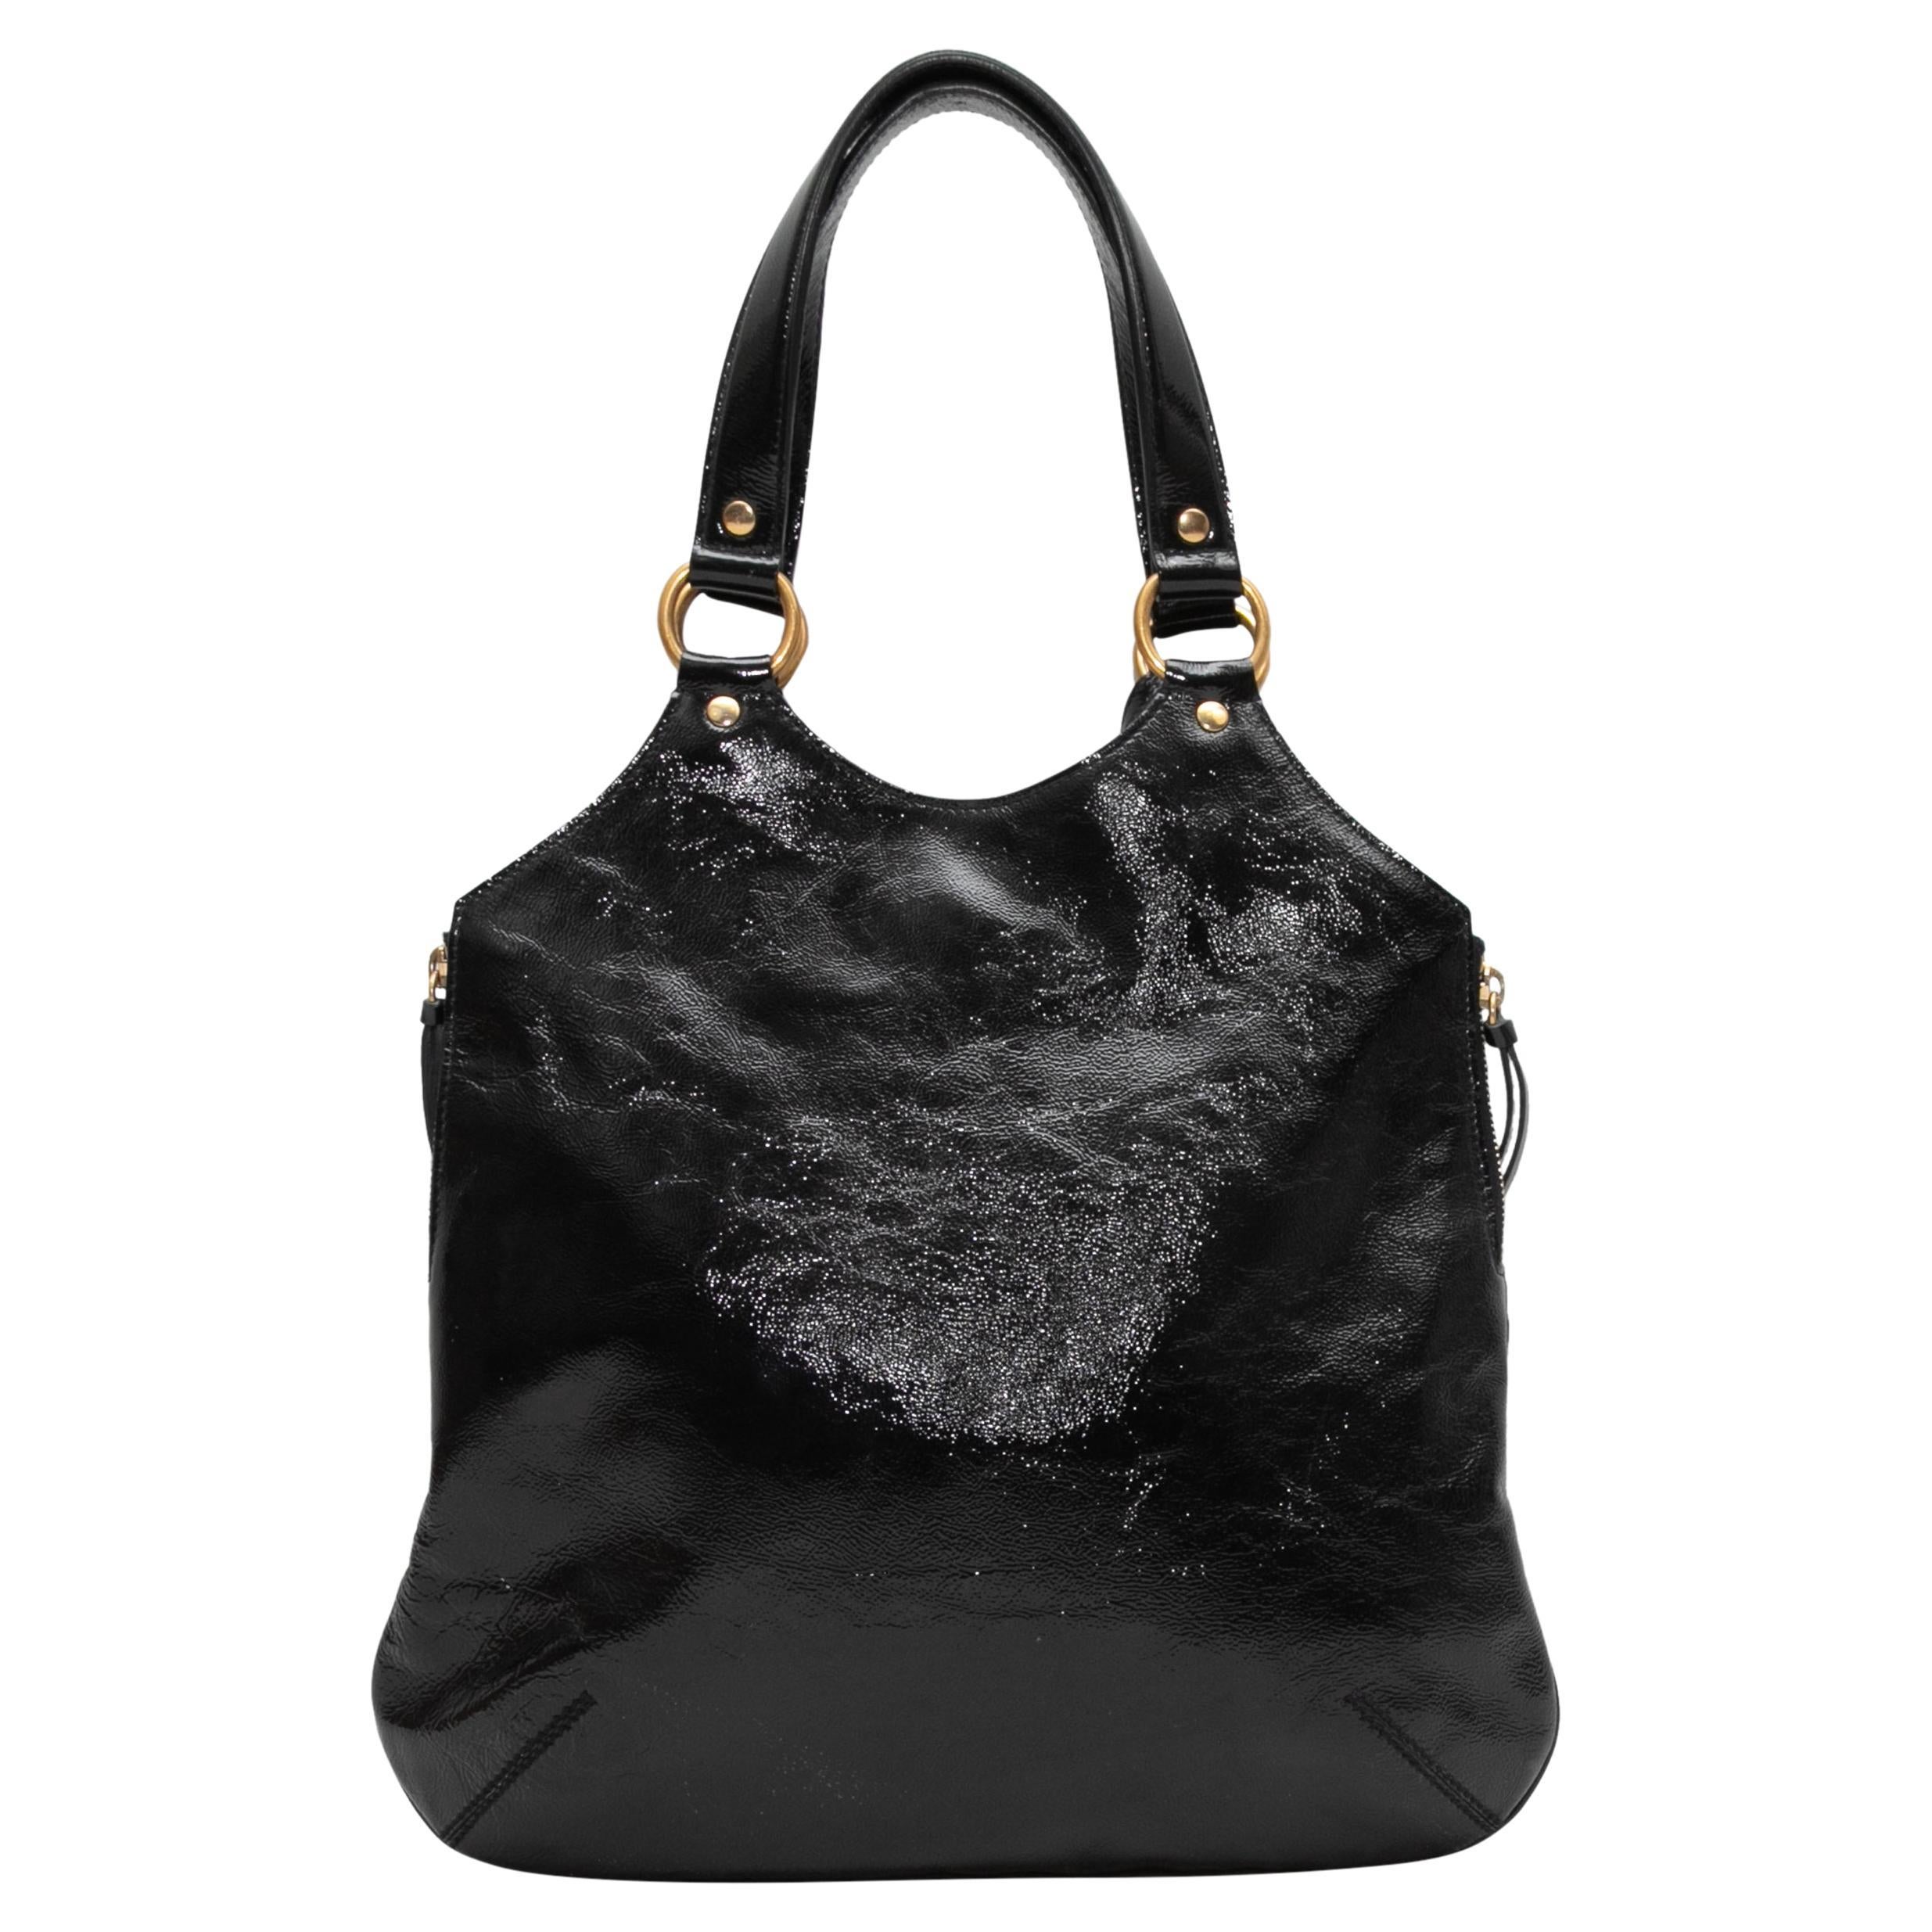 Black Yves Saint Laurent Patent Leather Handbag For Sale